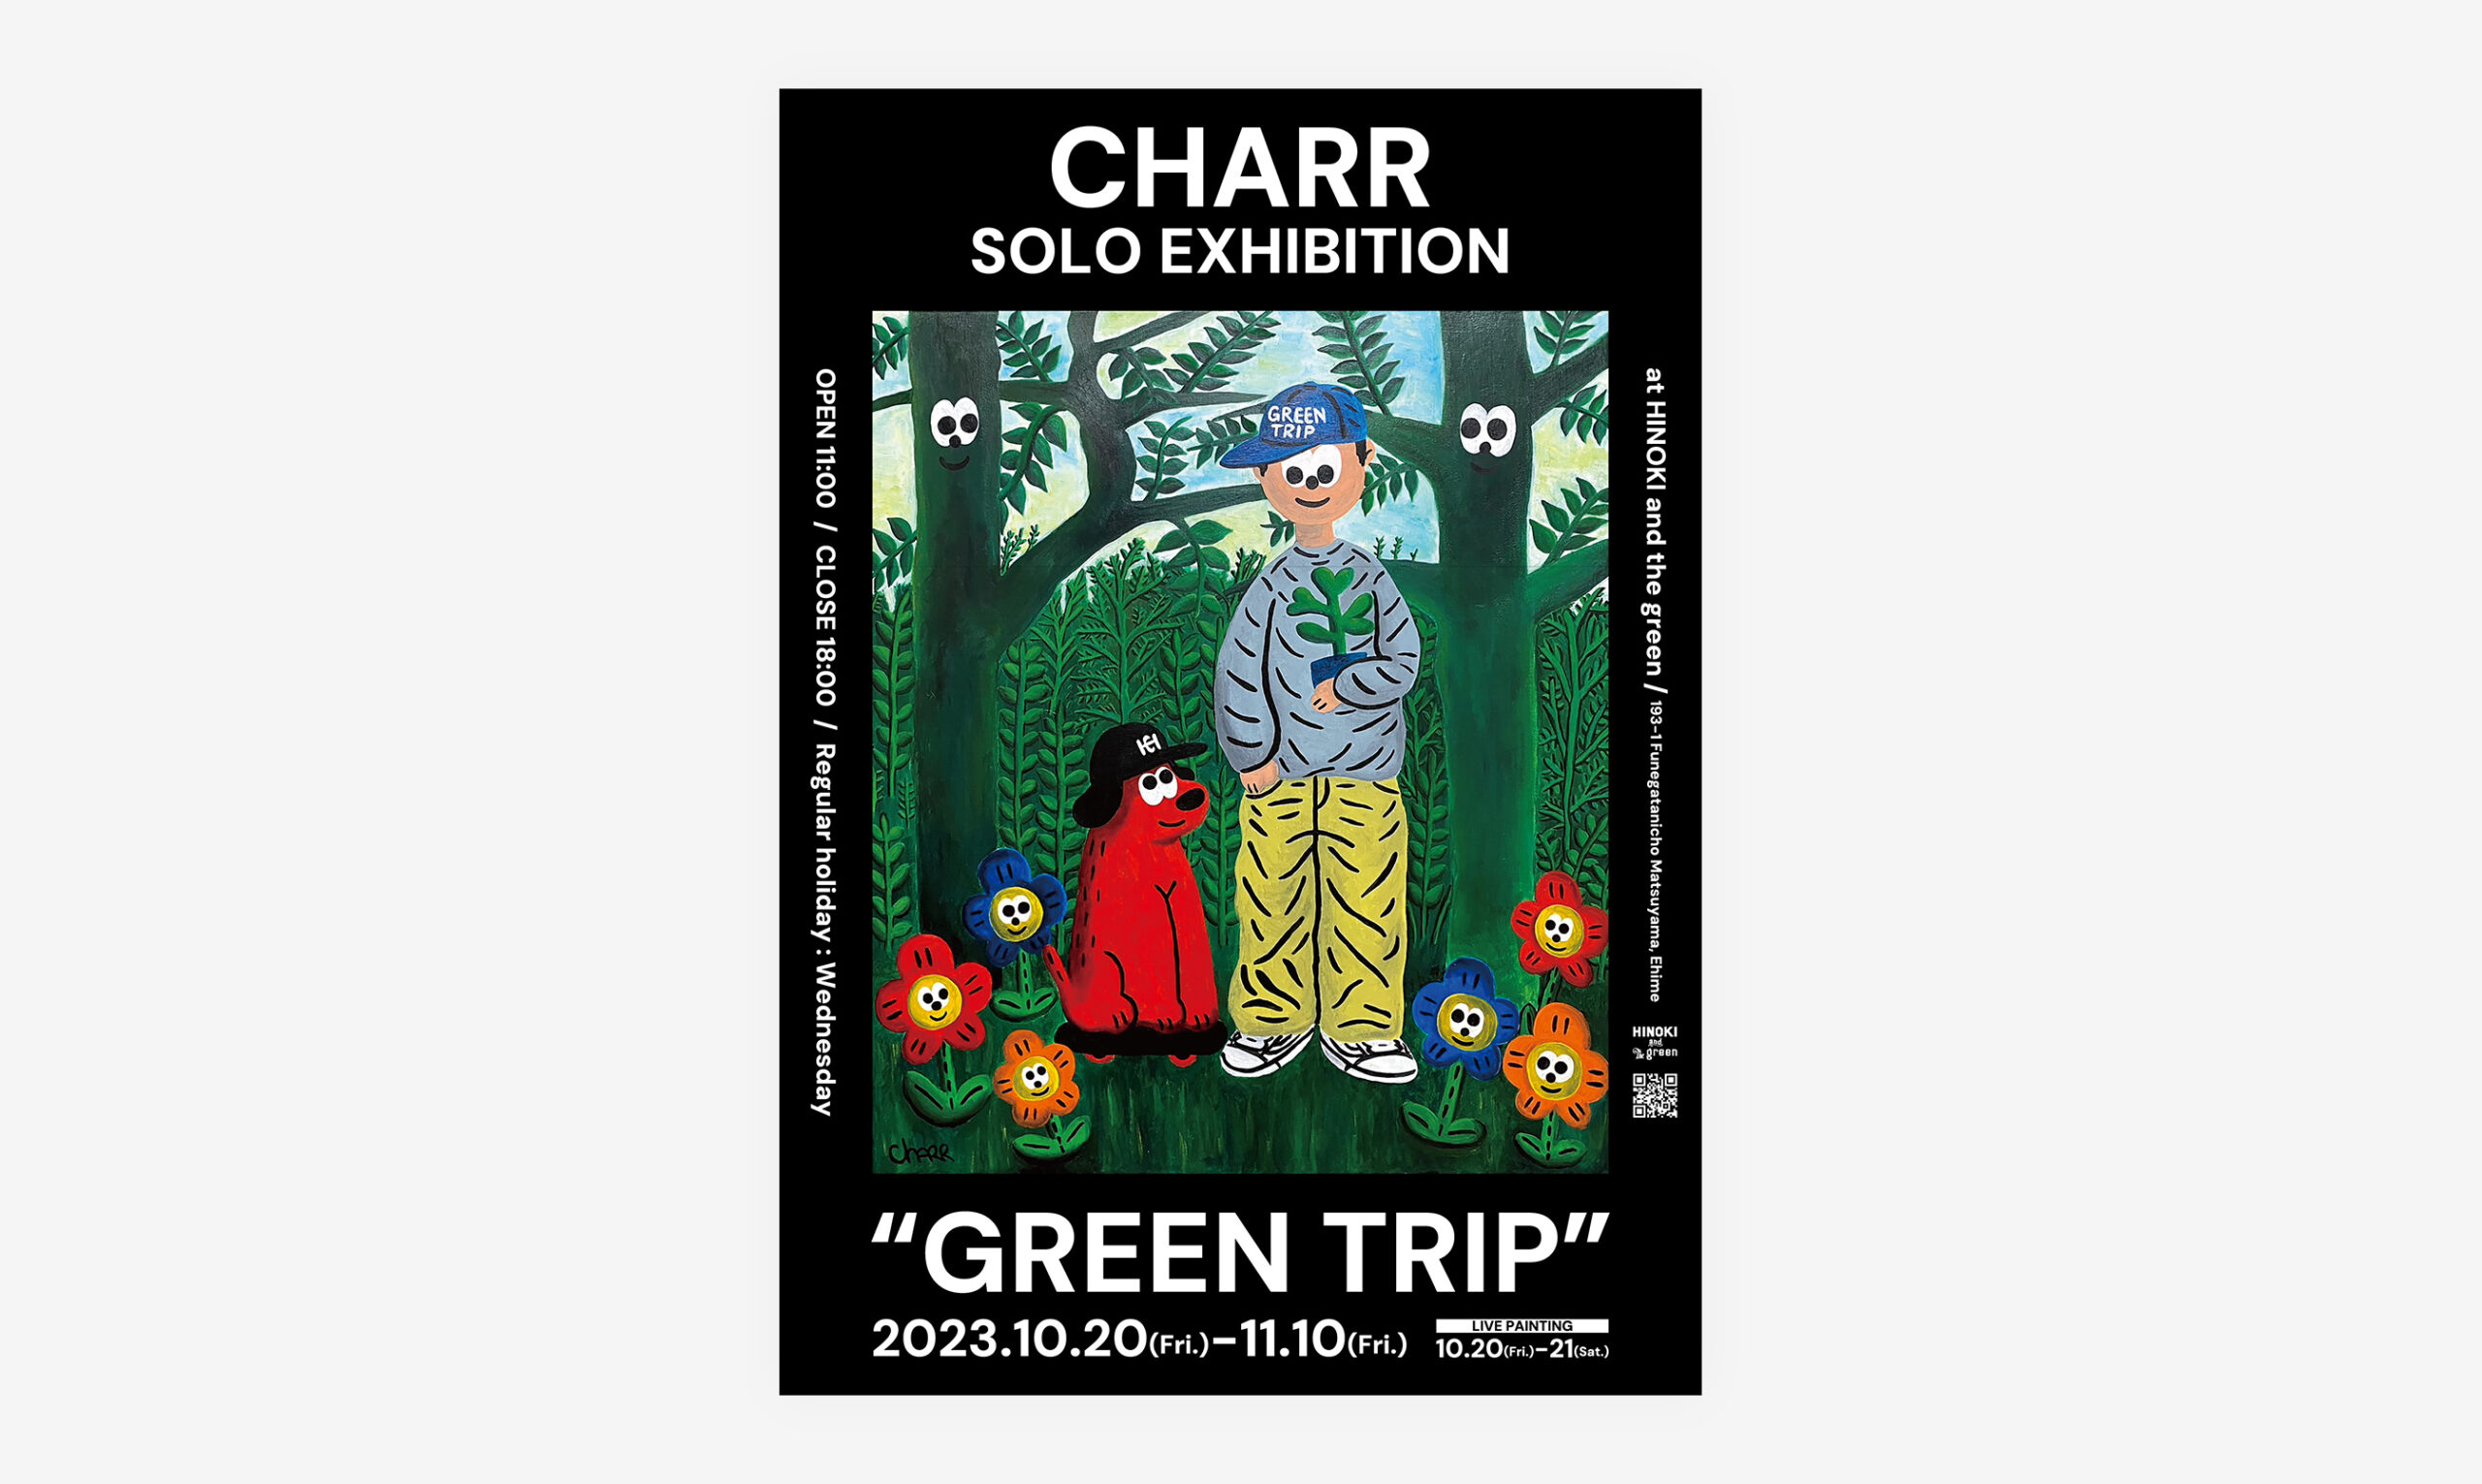 CHARR SOLO EXHIBITION “GREEN TRIP”